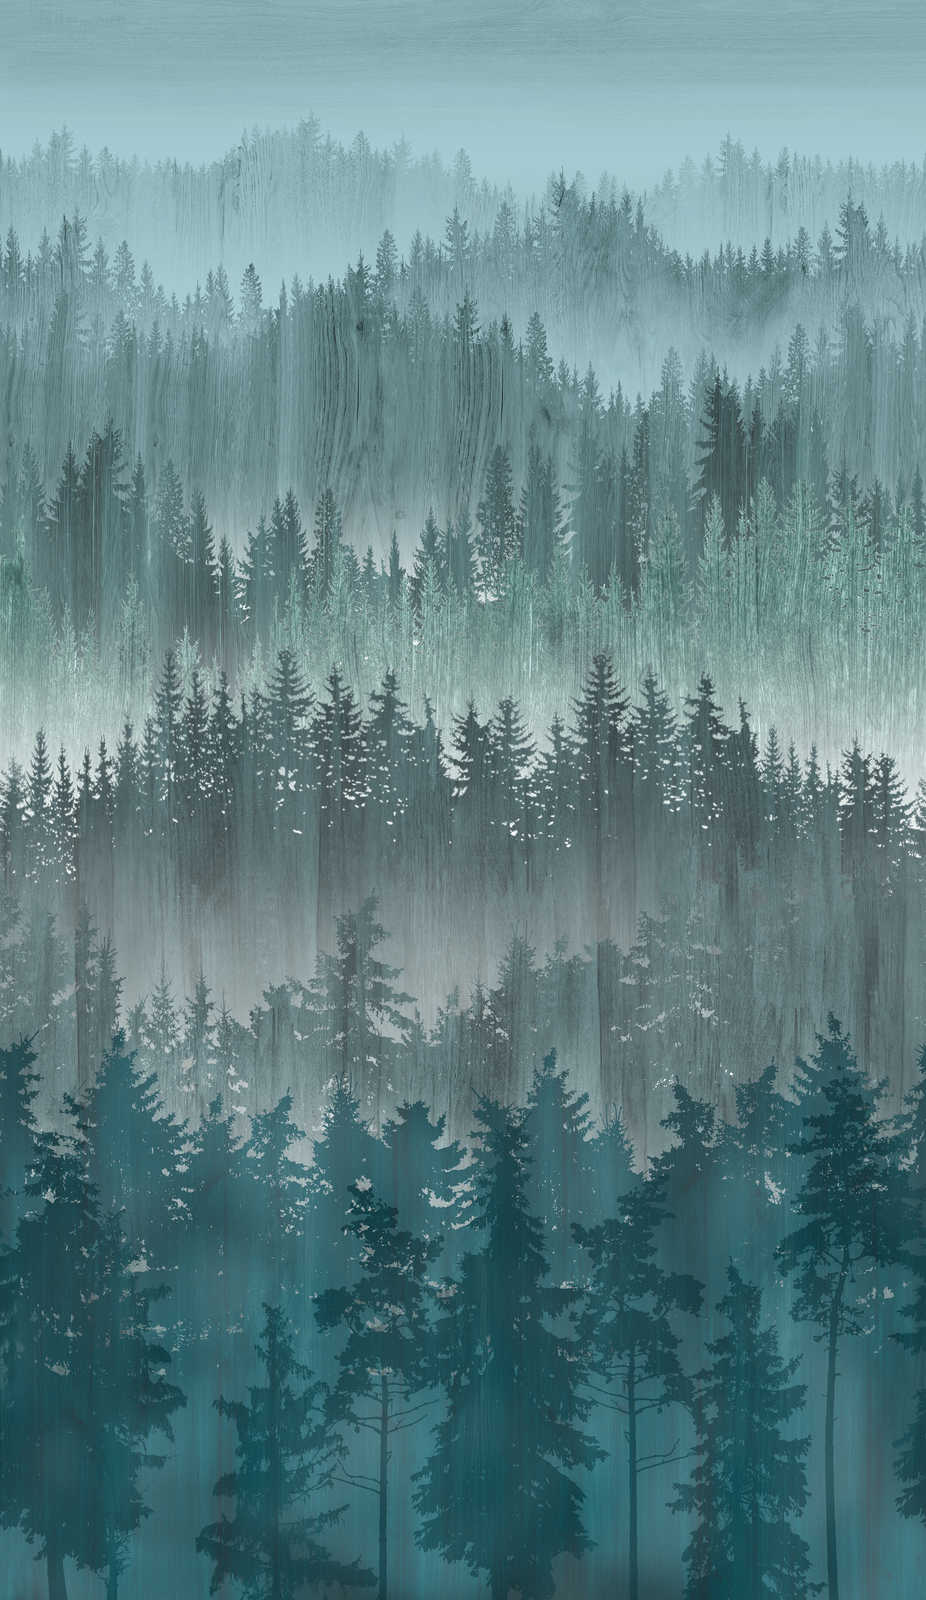             Vliestapete mit abstraktem Waldmuster – Blau, Grau, Petrol
        